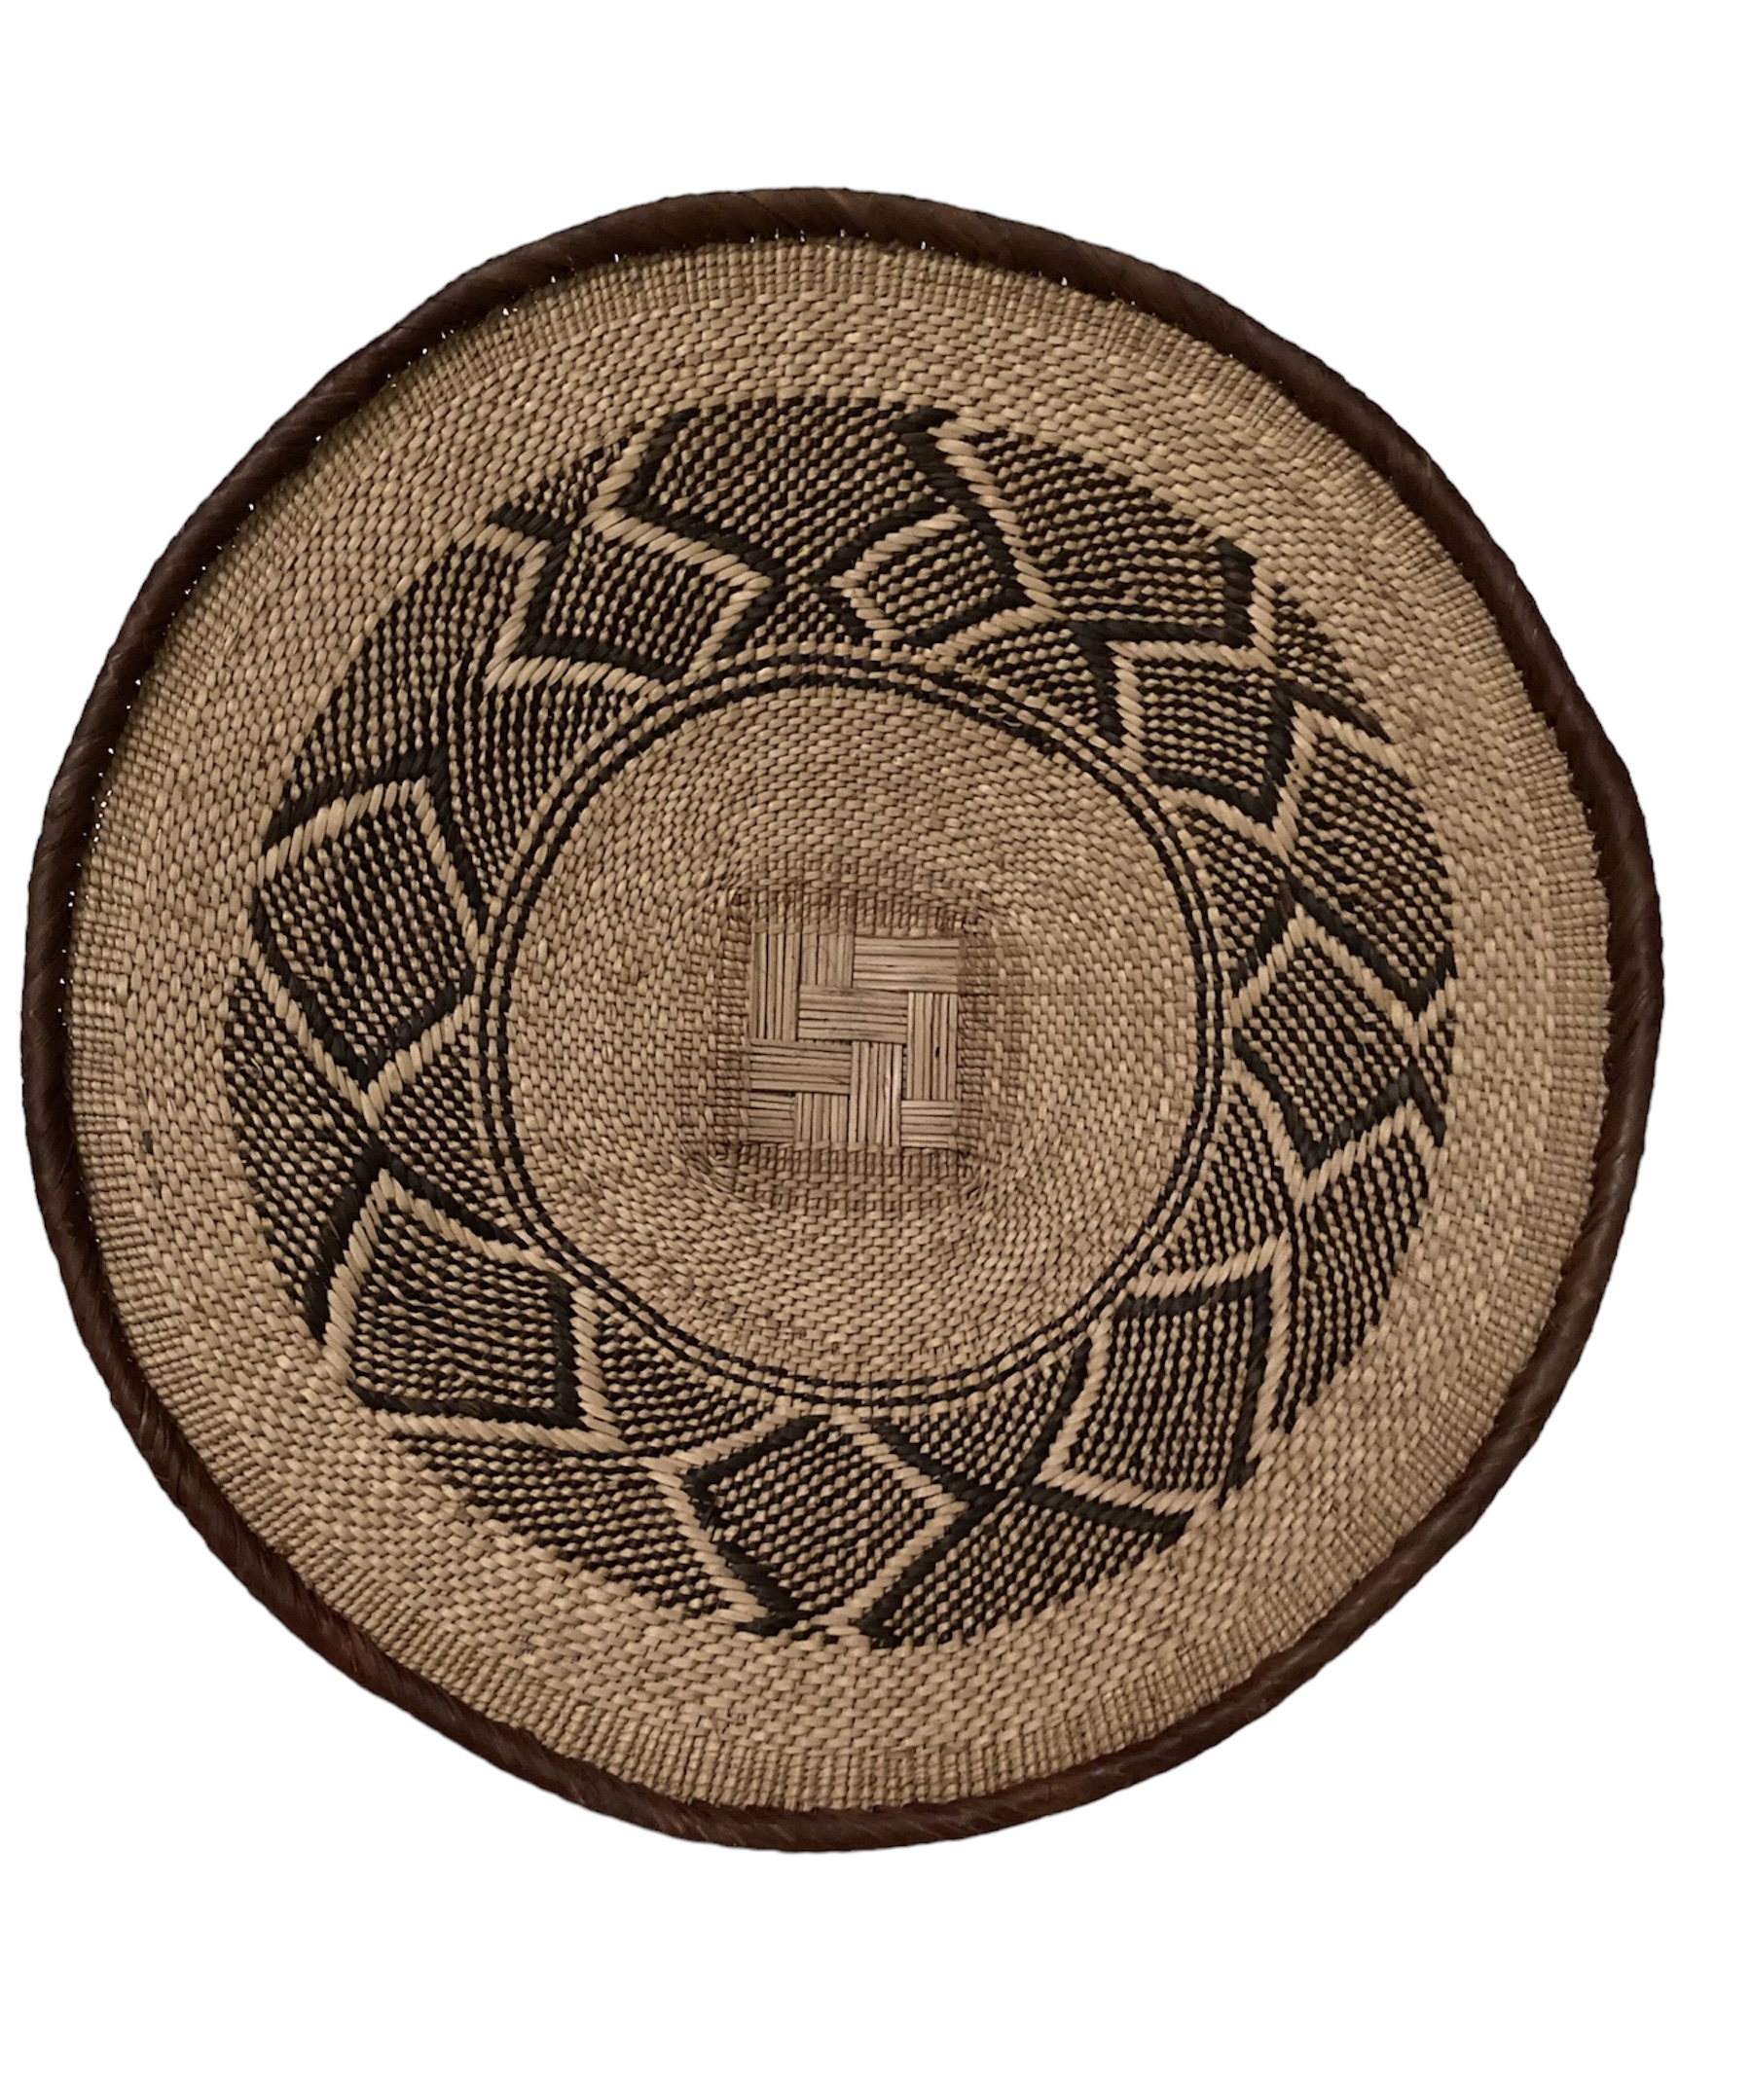 Tonga Basket from Zimbabwe - Design #022 - 19" dia.